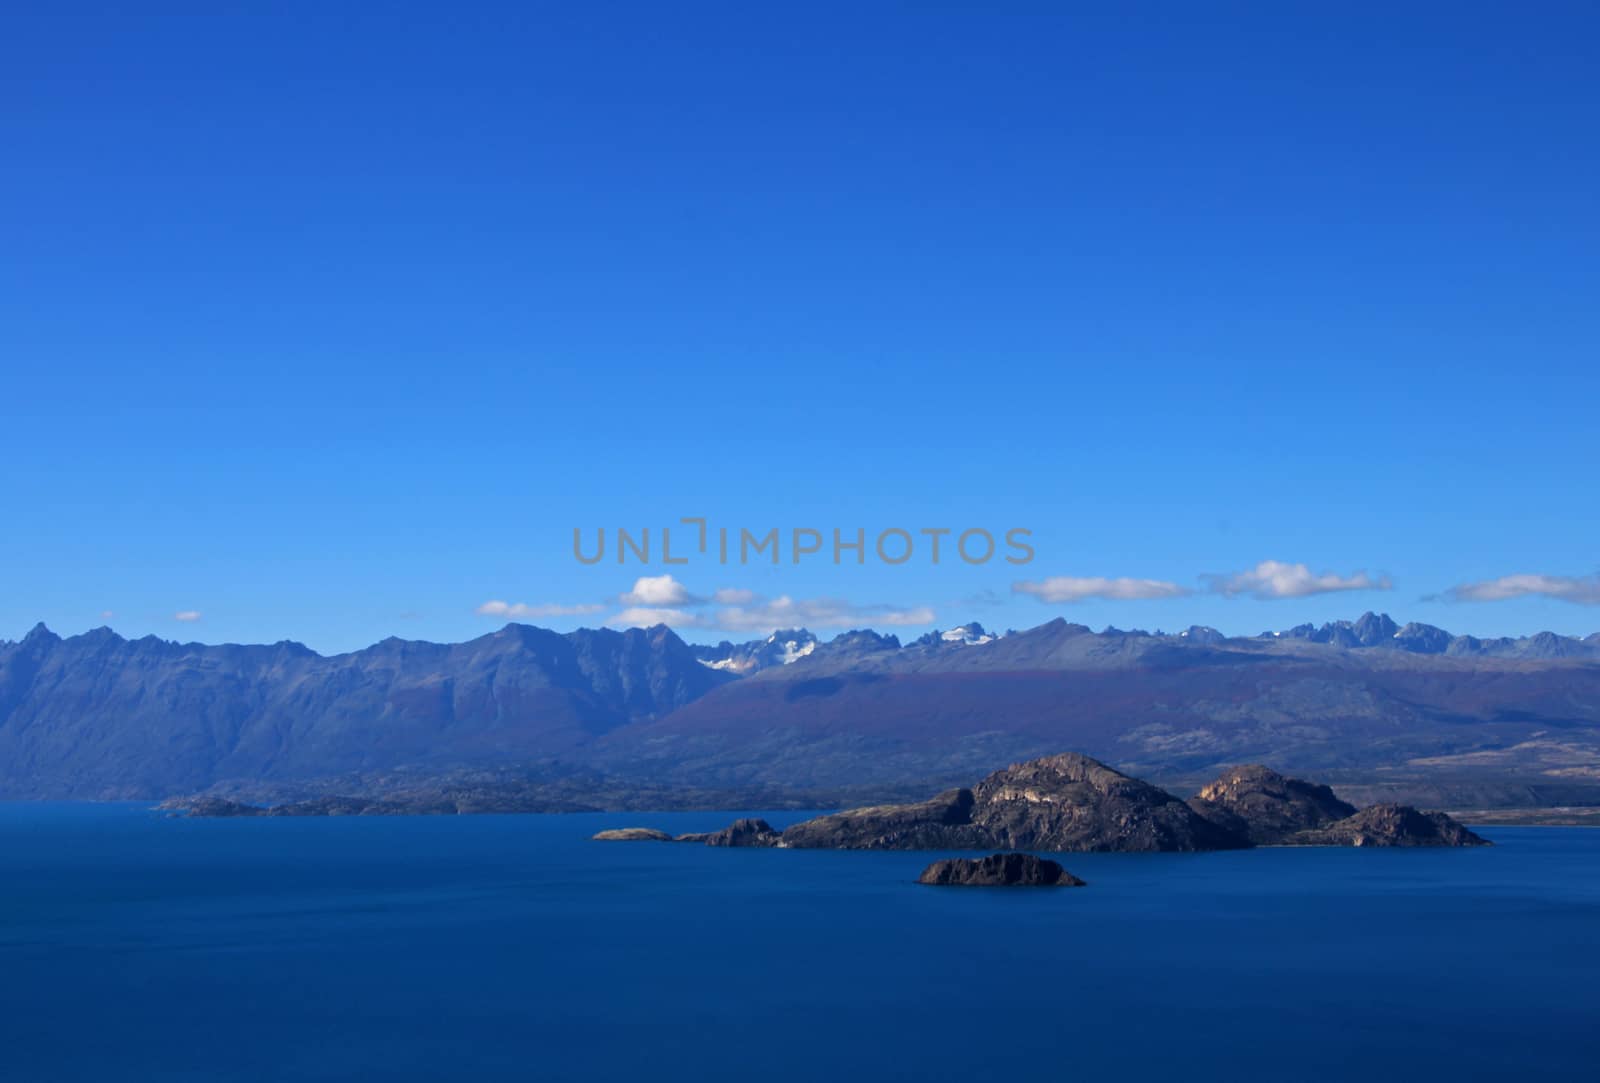 General Carrera Lake with islands, Patagonia, Chile